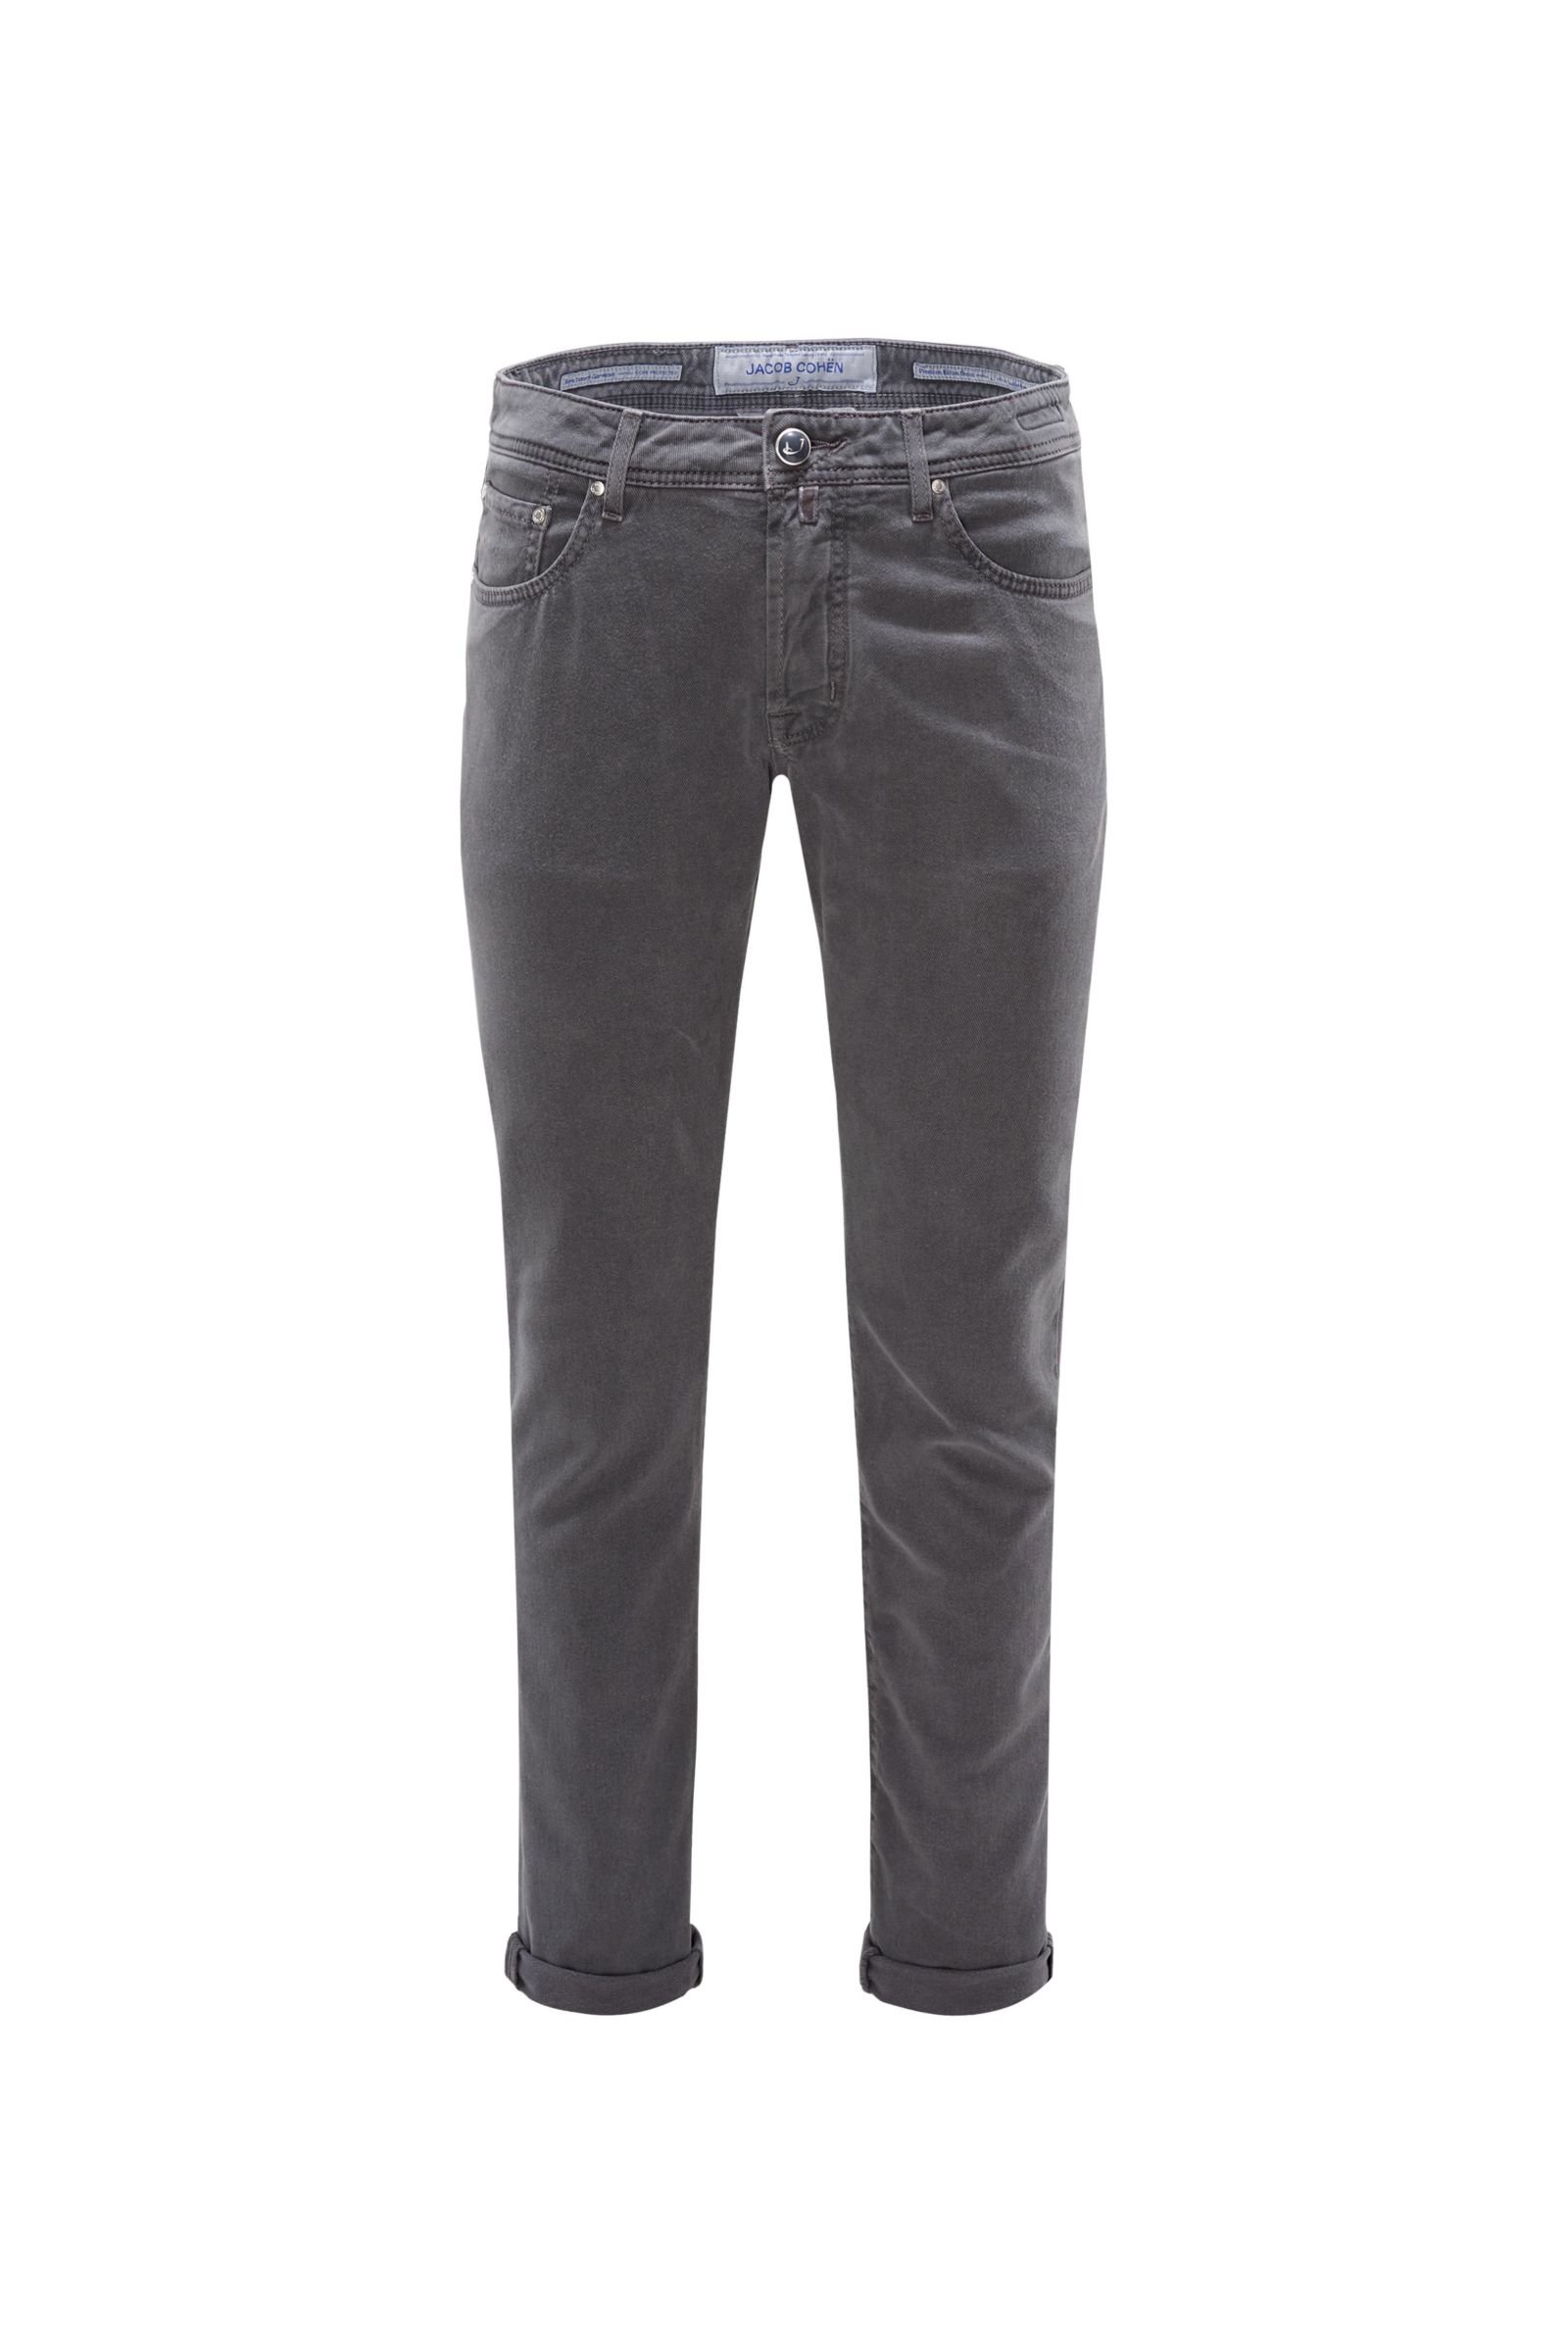 Cotton trousers 'J688 Comfort Slim Fit' grey